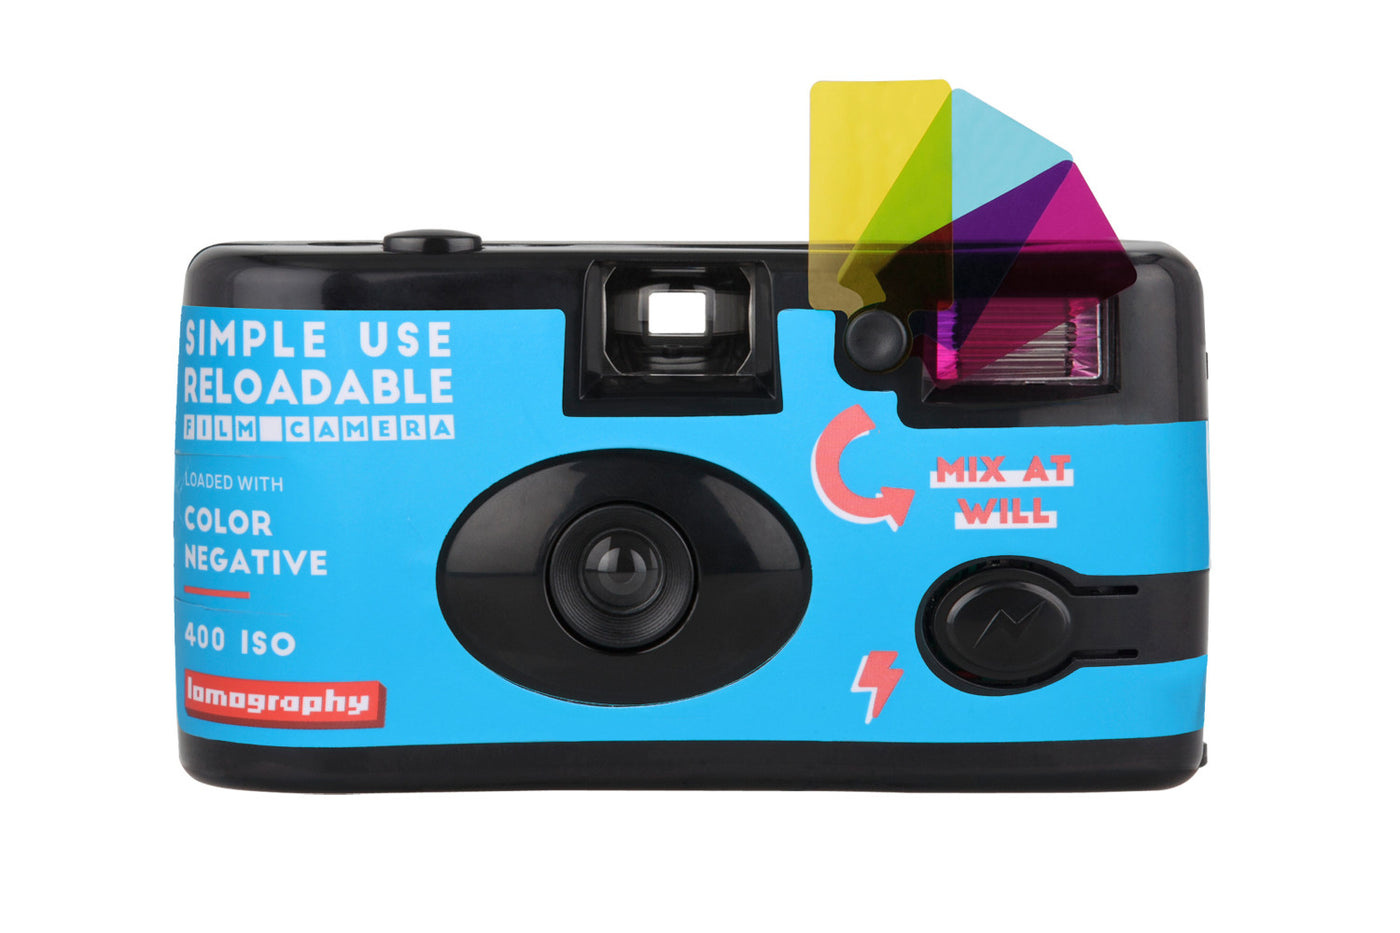 Lomography Simple Use Reusable Film Camera Color Negative 400